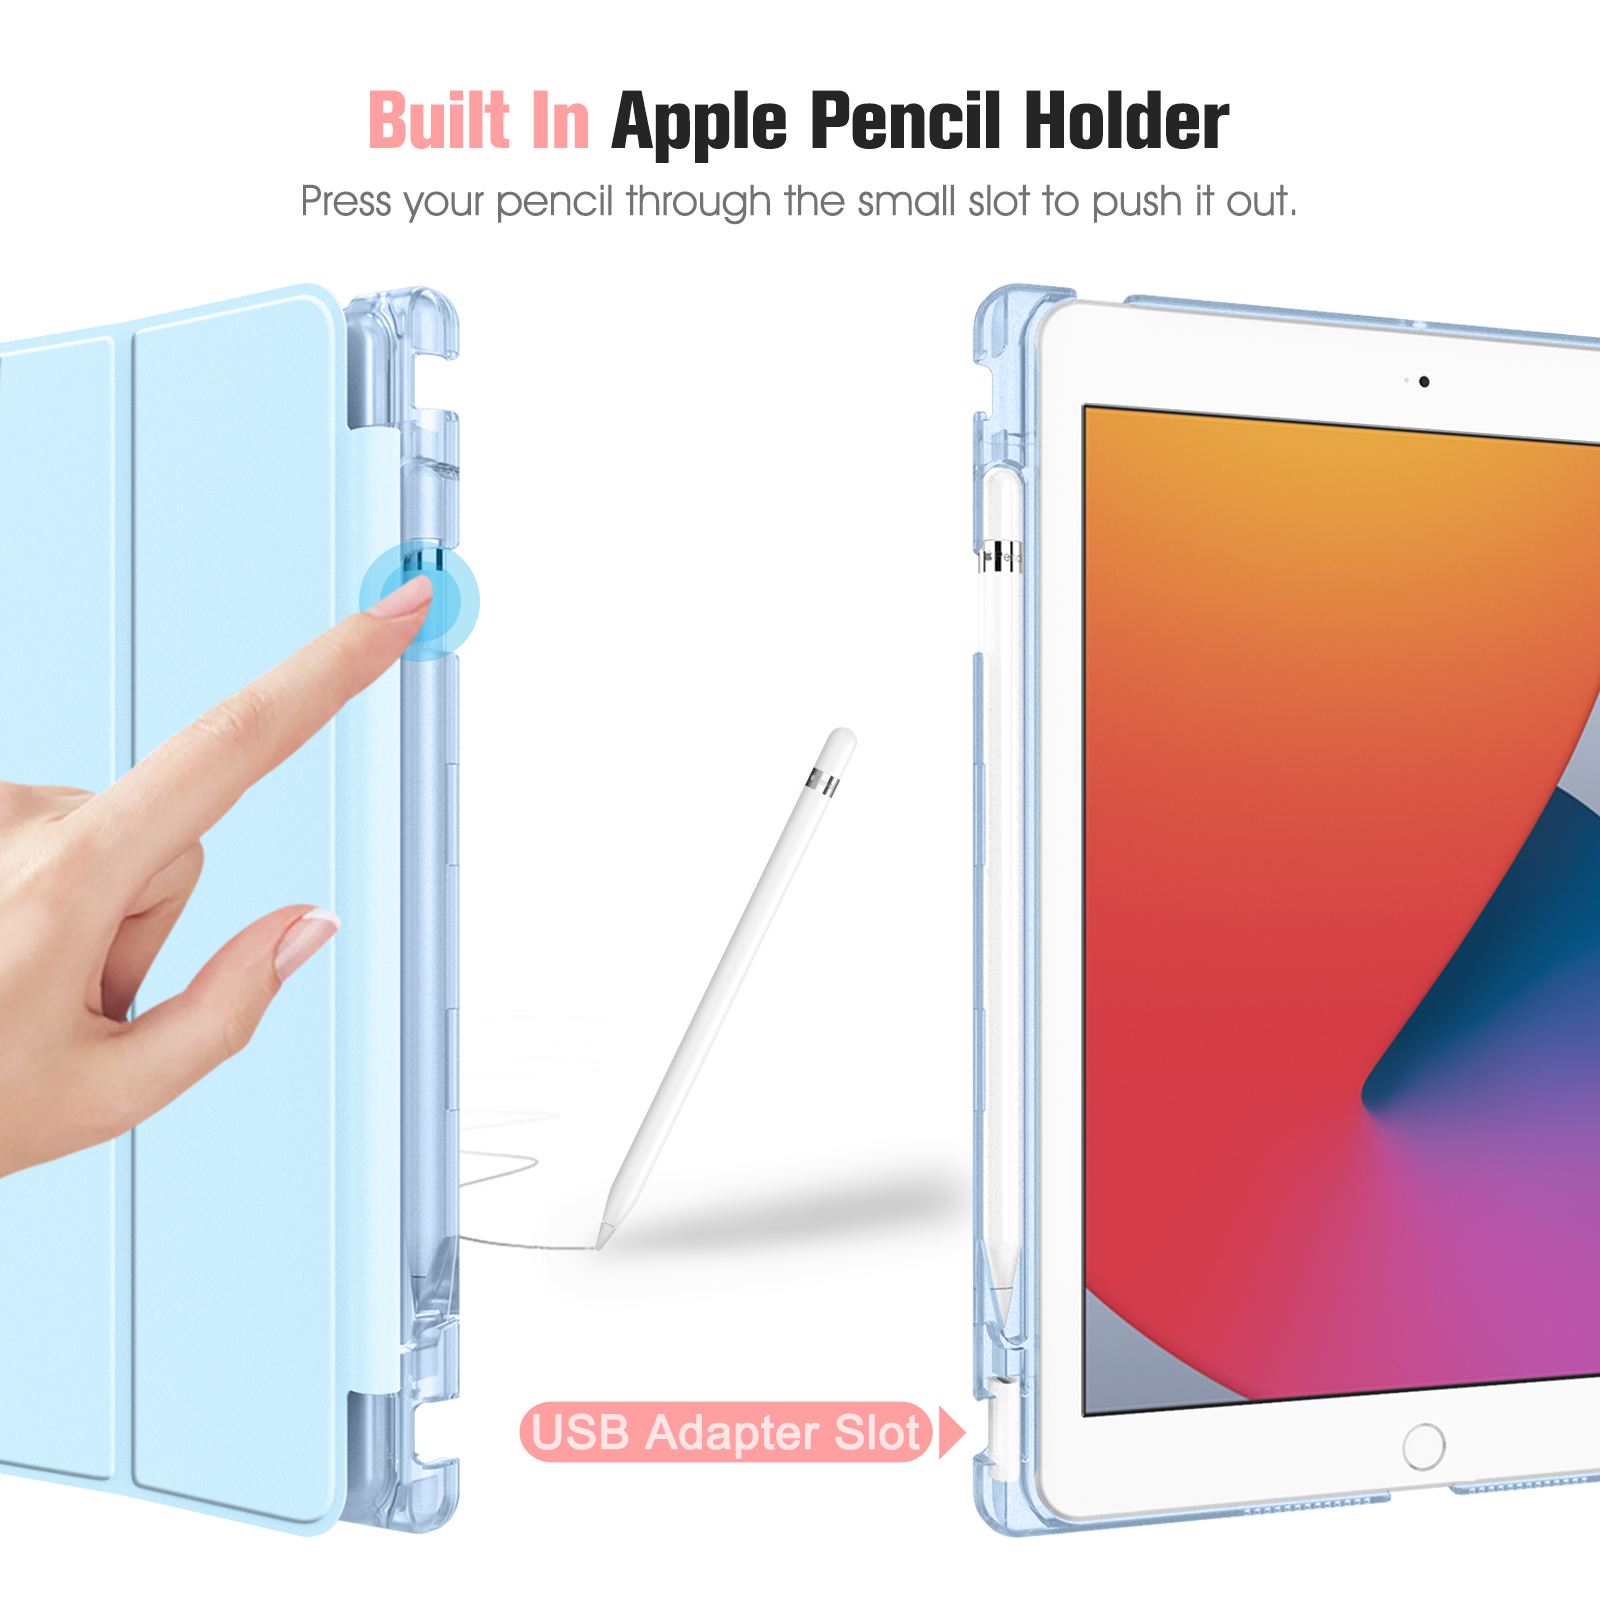 Himmelblau - Hülle, 10.2 FINTIE iPad Generation Bookcover, (9/8/7 Apple, 2021/2020/2019), Zoll